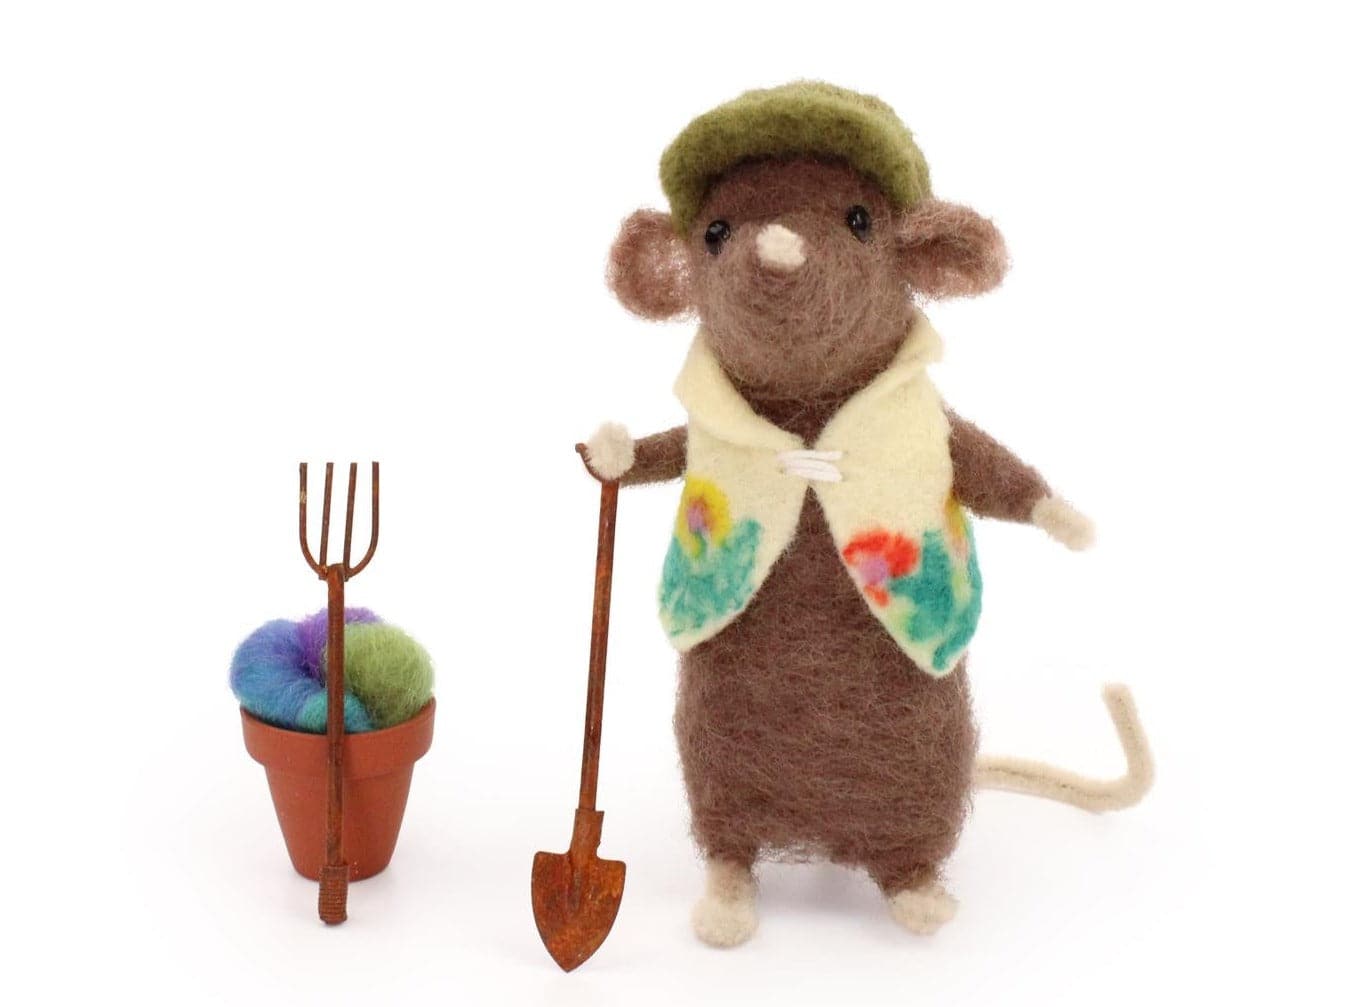 Gardening Mouse Small Needle Felt Kit - The Makerss